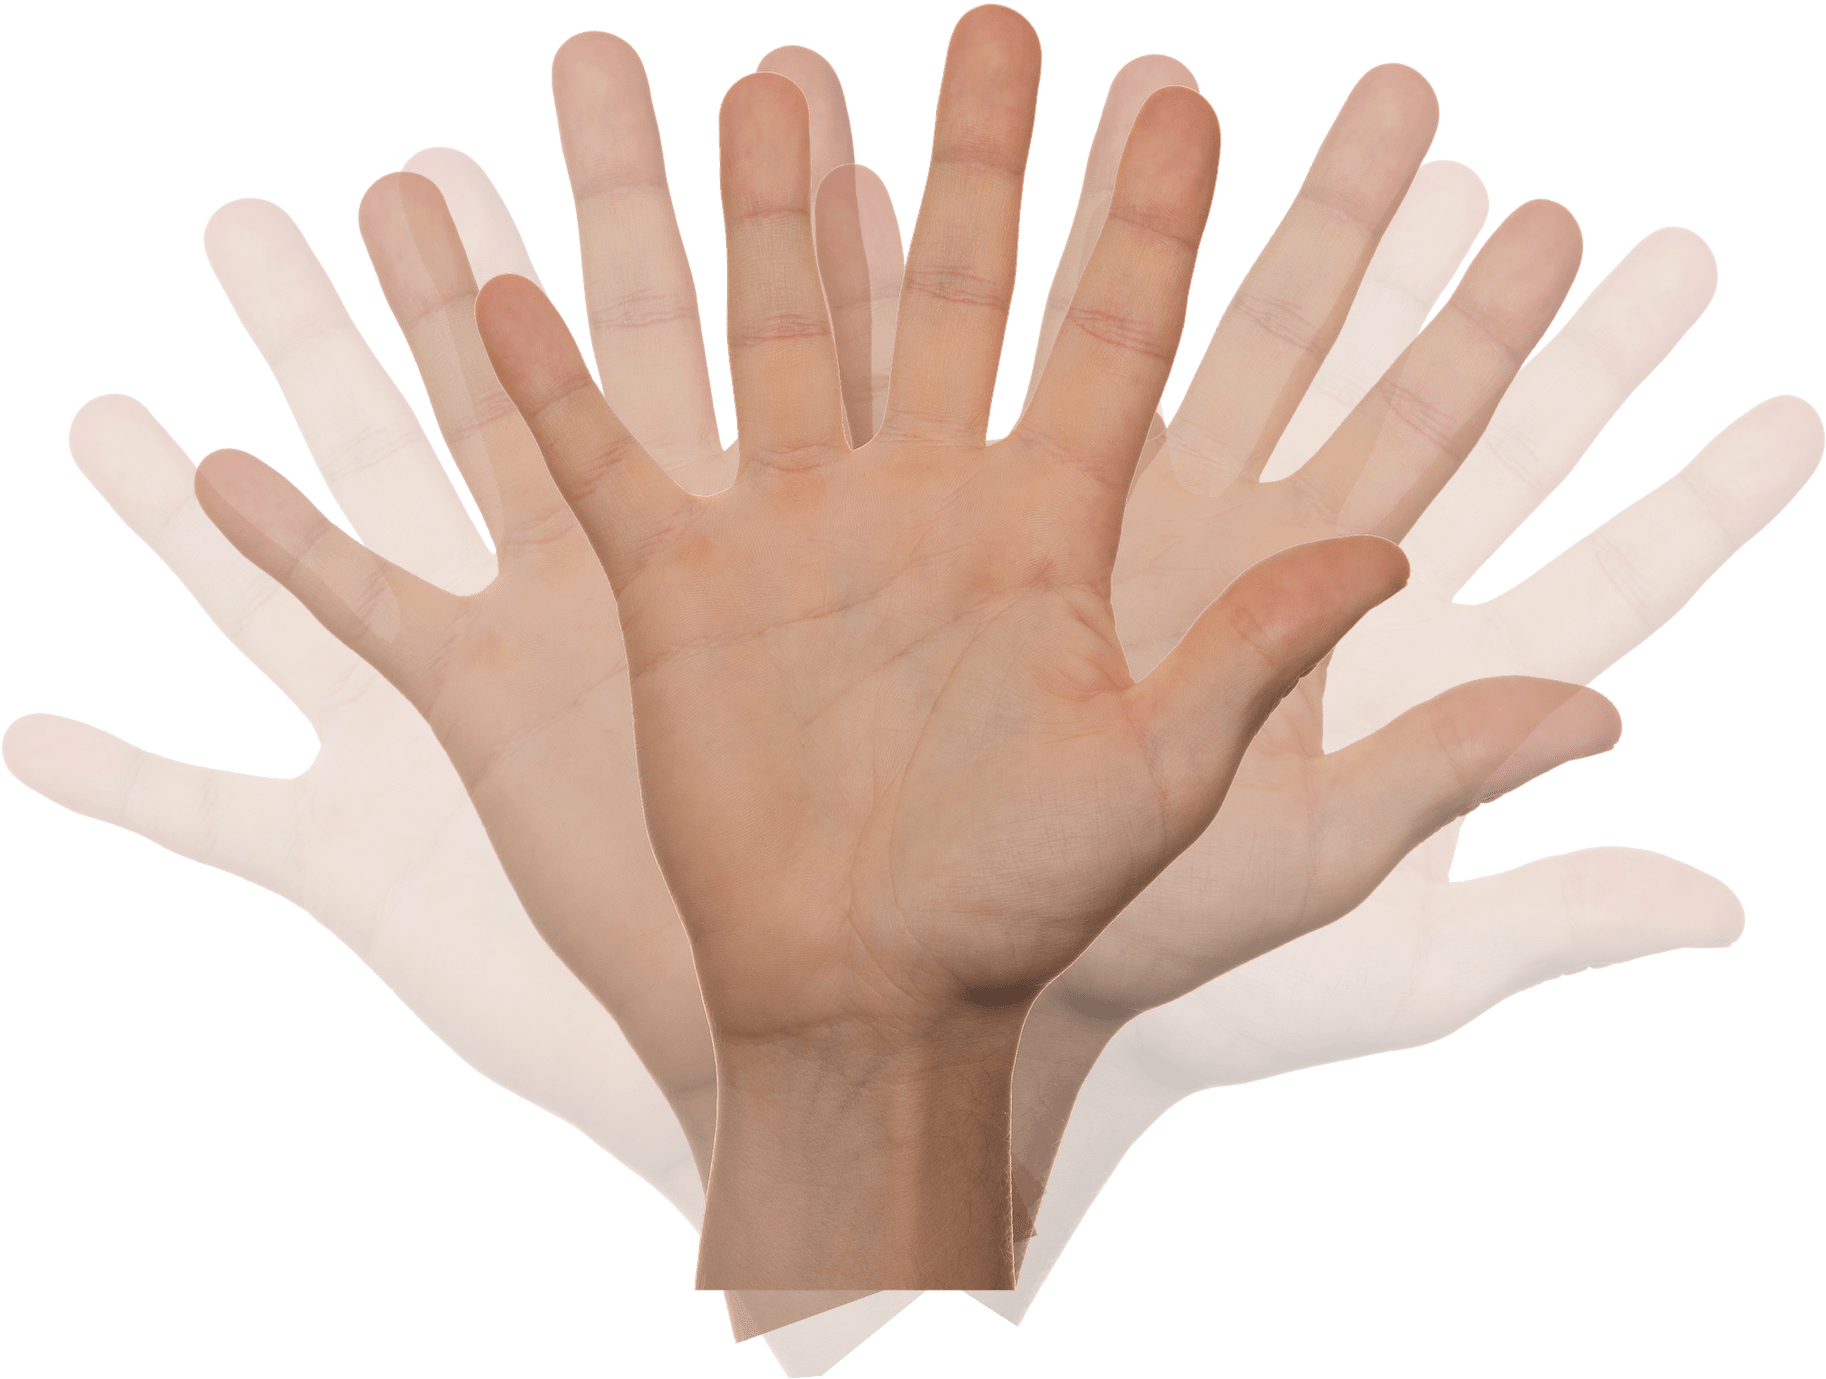 Multiple Hands Gesture PNG image